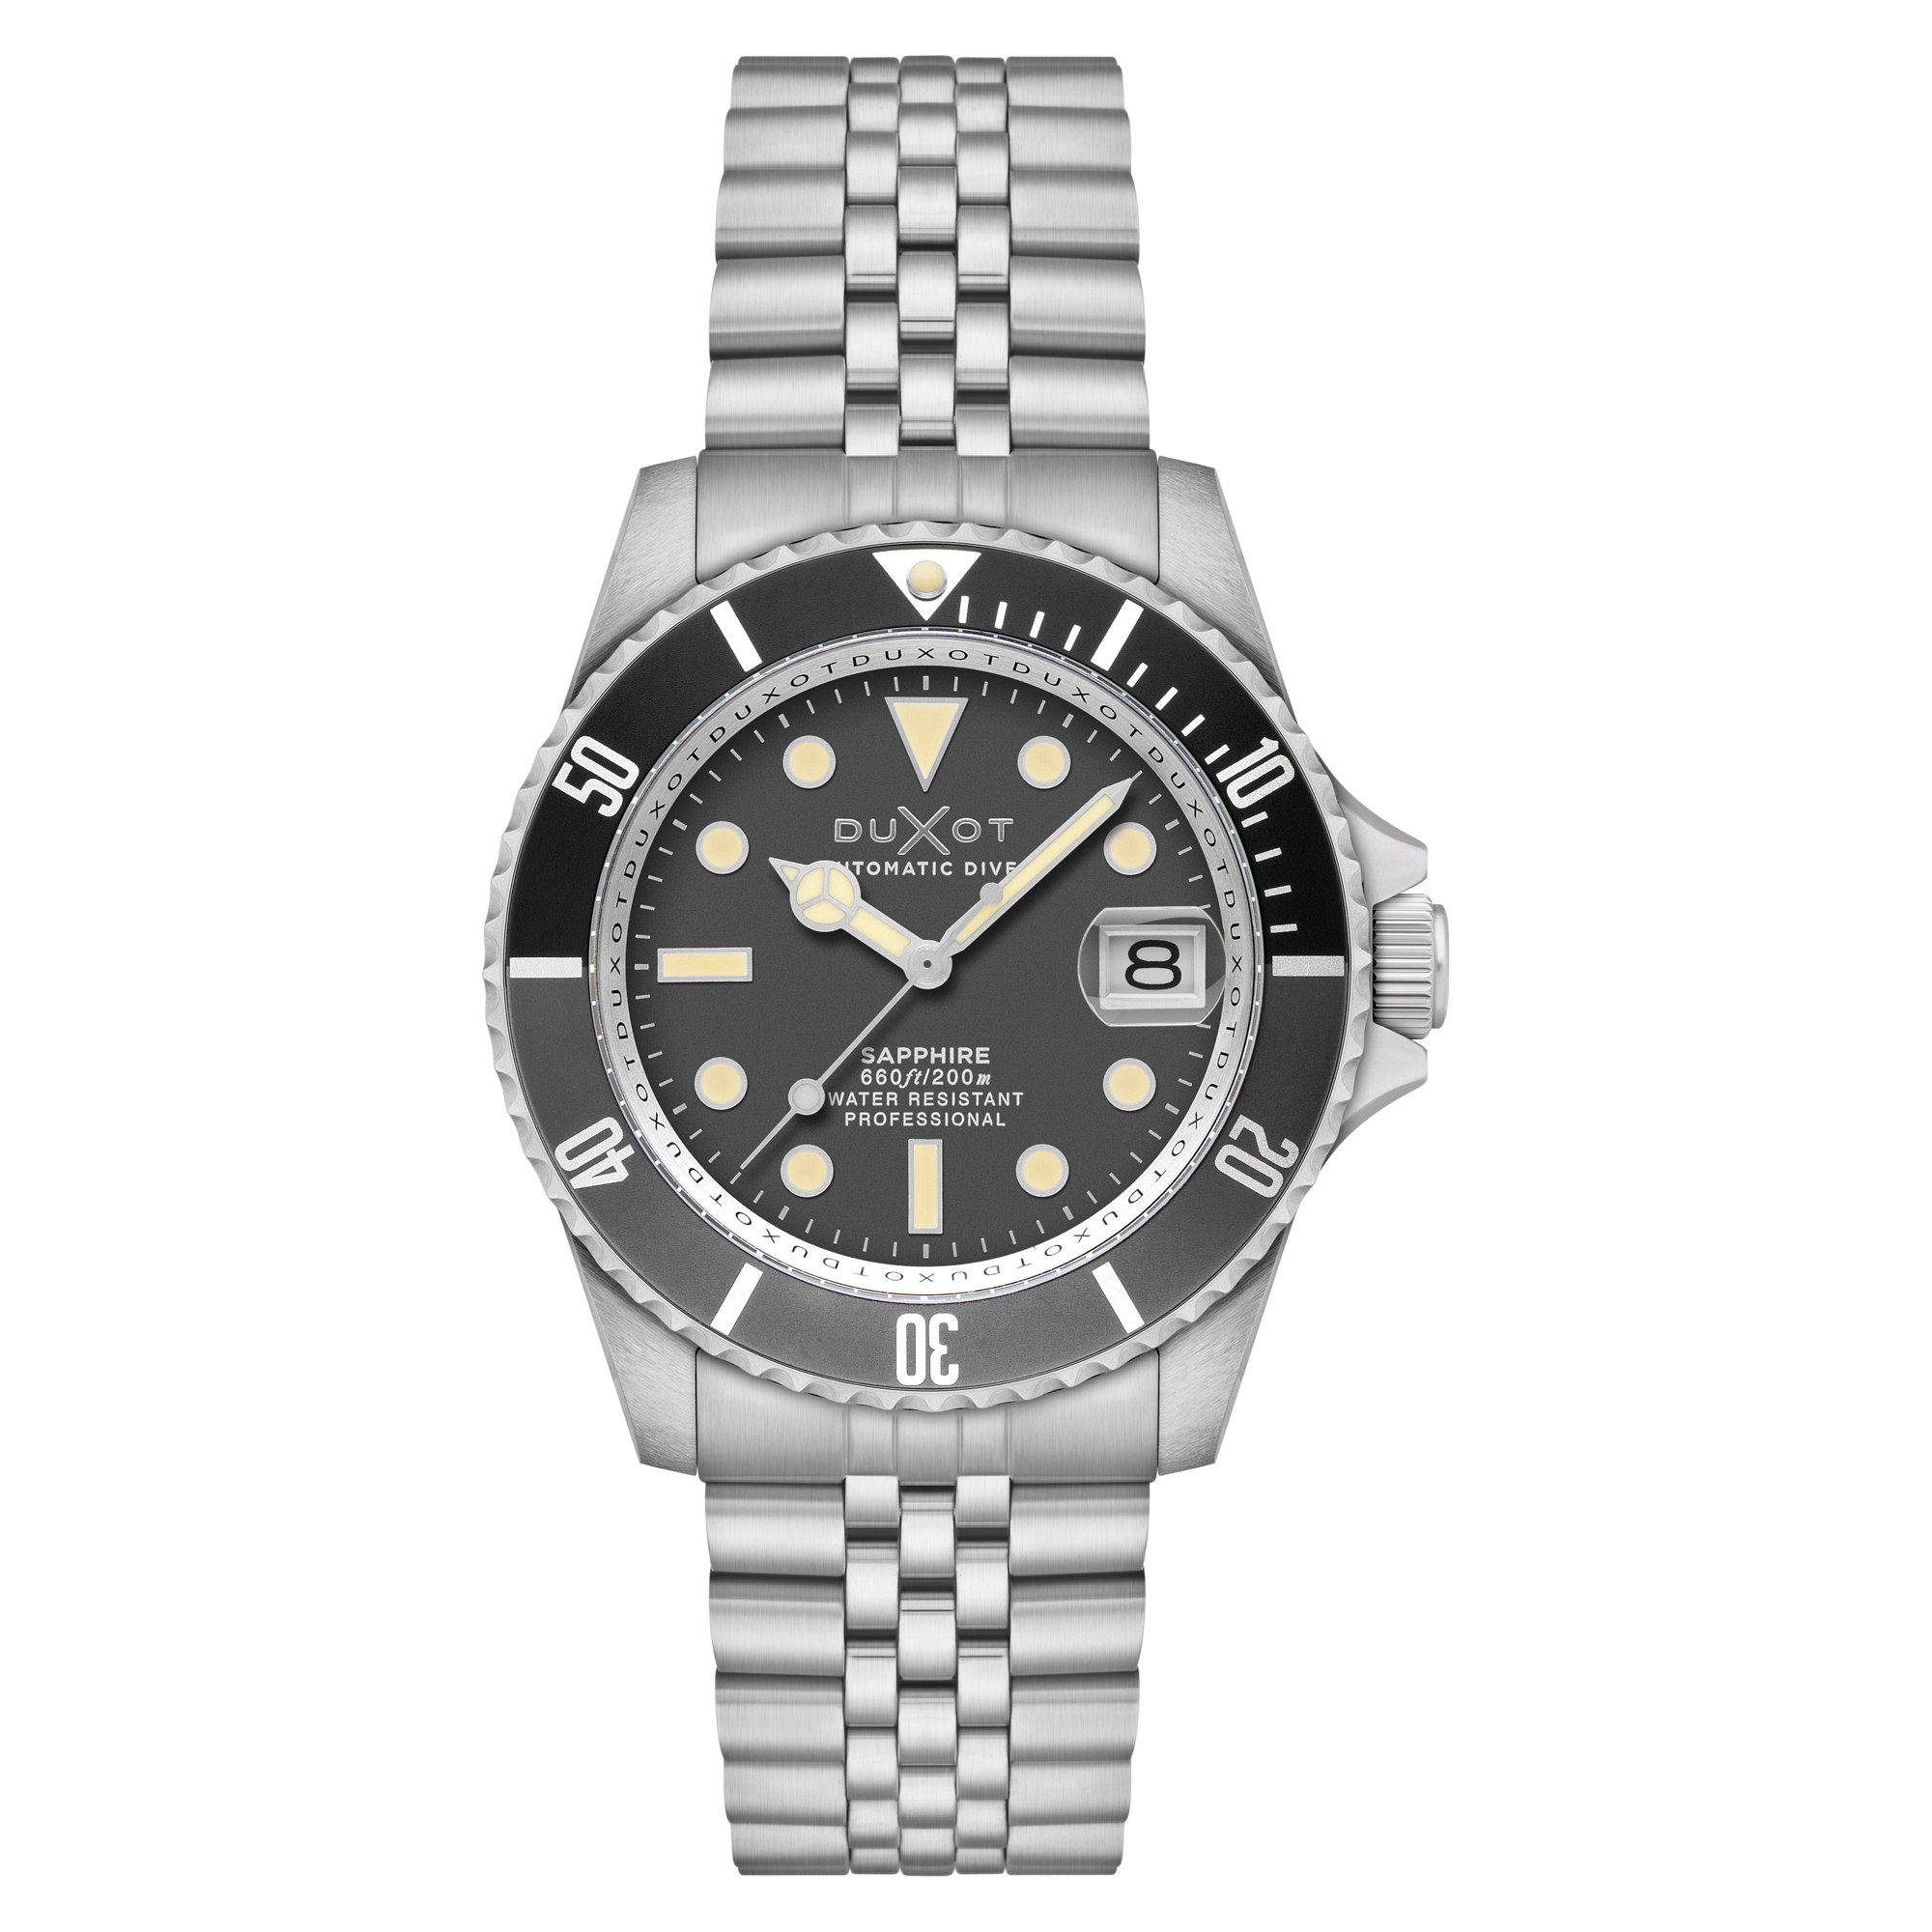 Duxot Atlantica Diver Automatic Charcoal Grey Men's Watch DX-2057-55